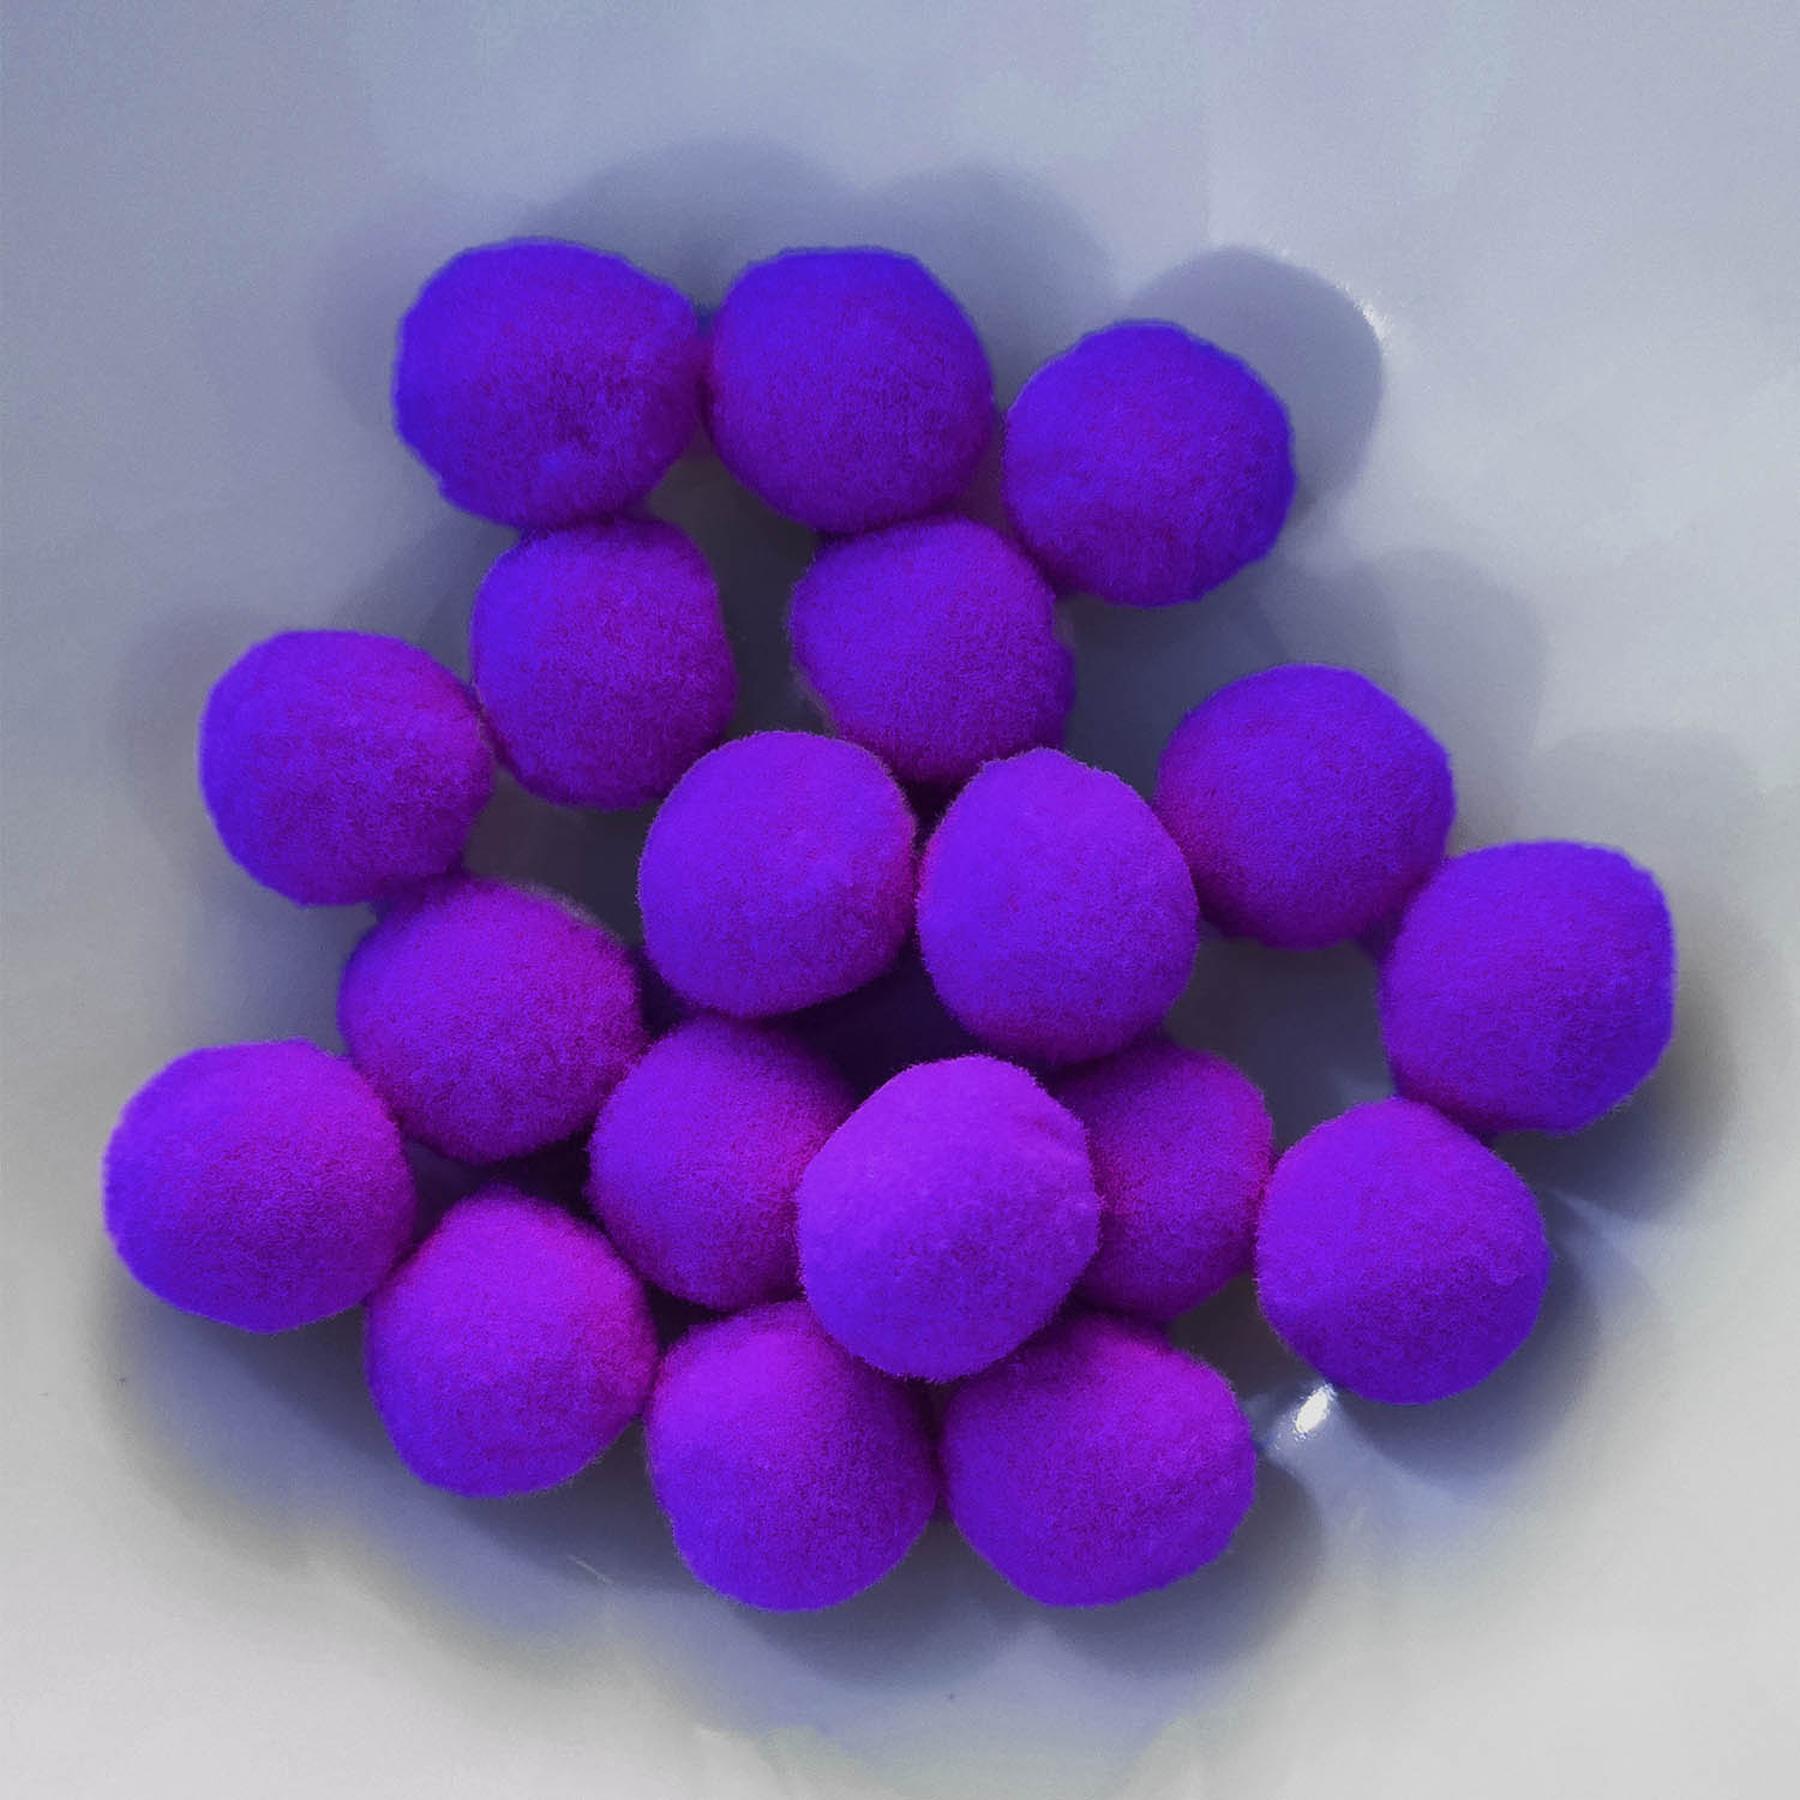 PomPon / Bälle aus Baumwolle - 10 mm / 50er Set - Flieder dunkel